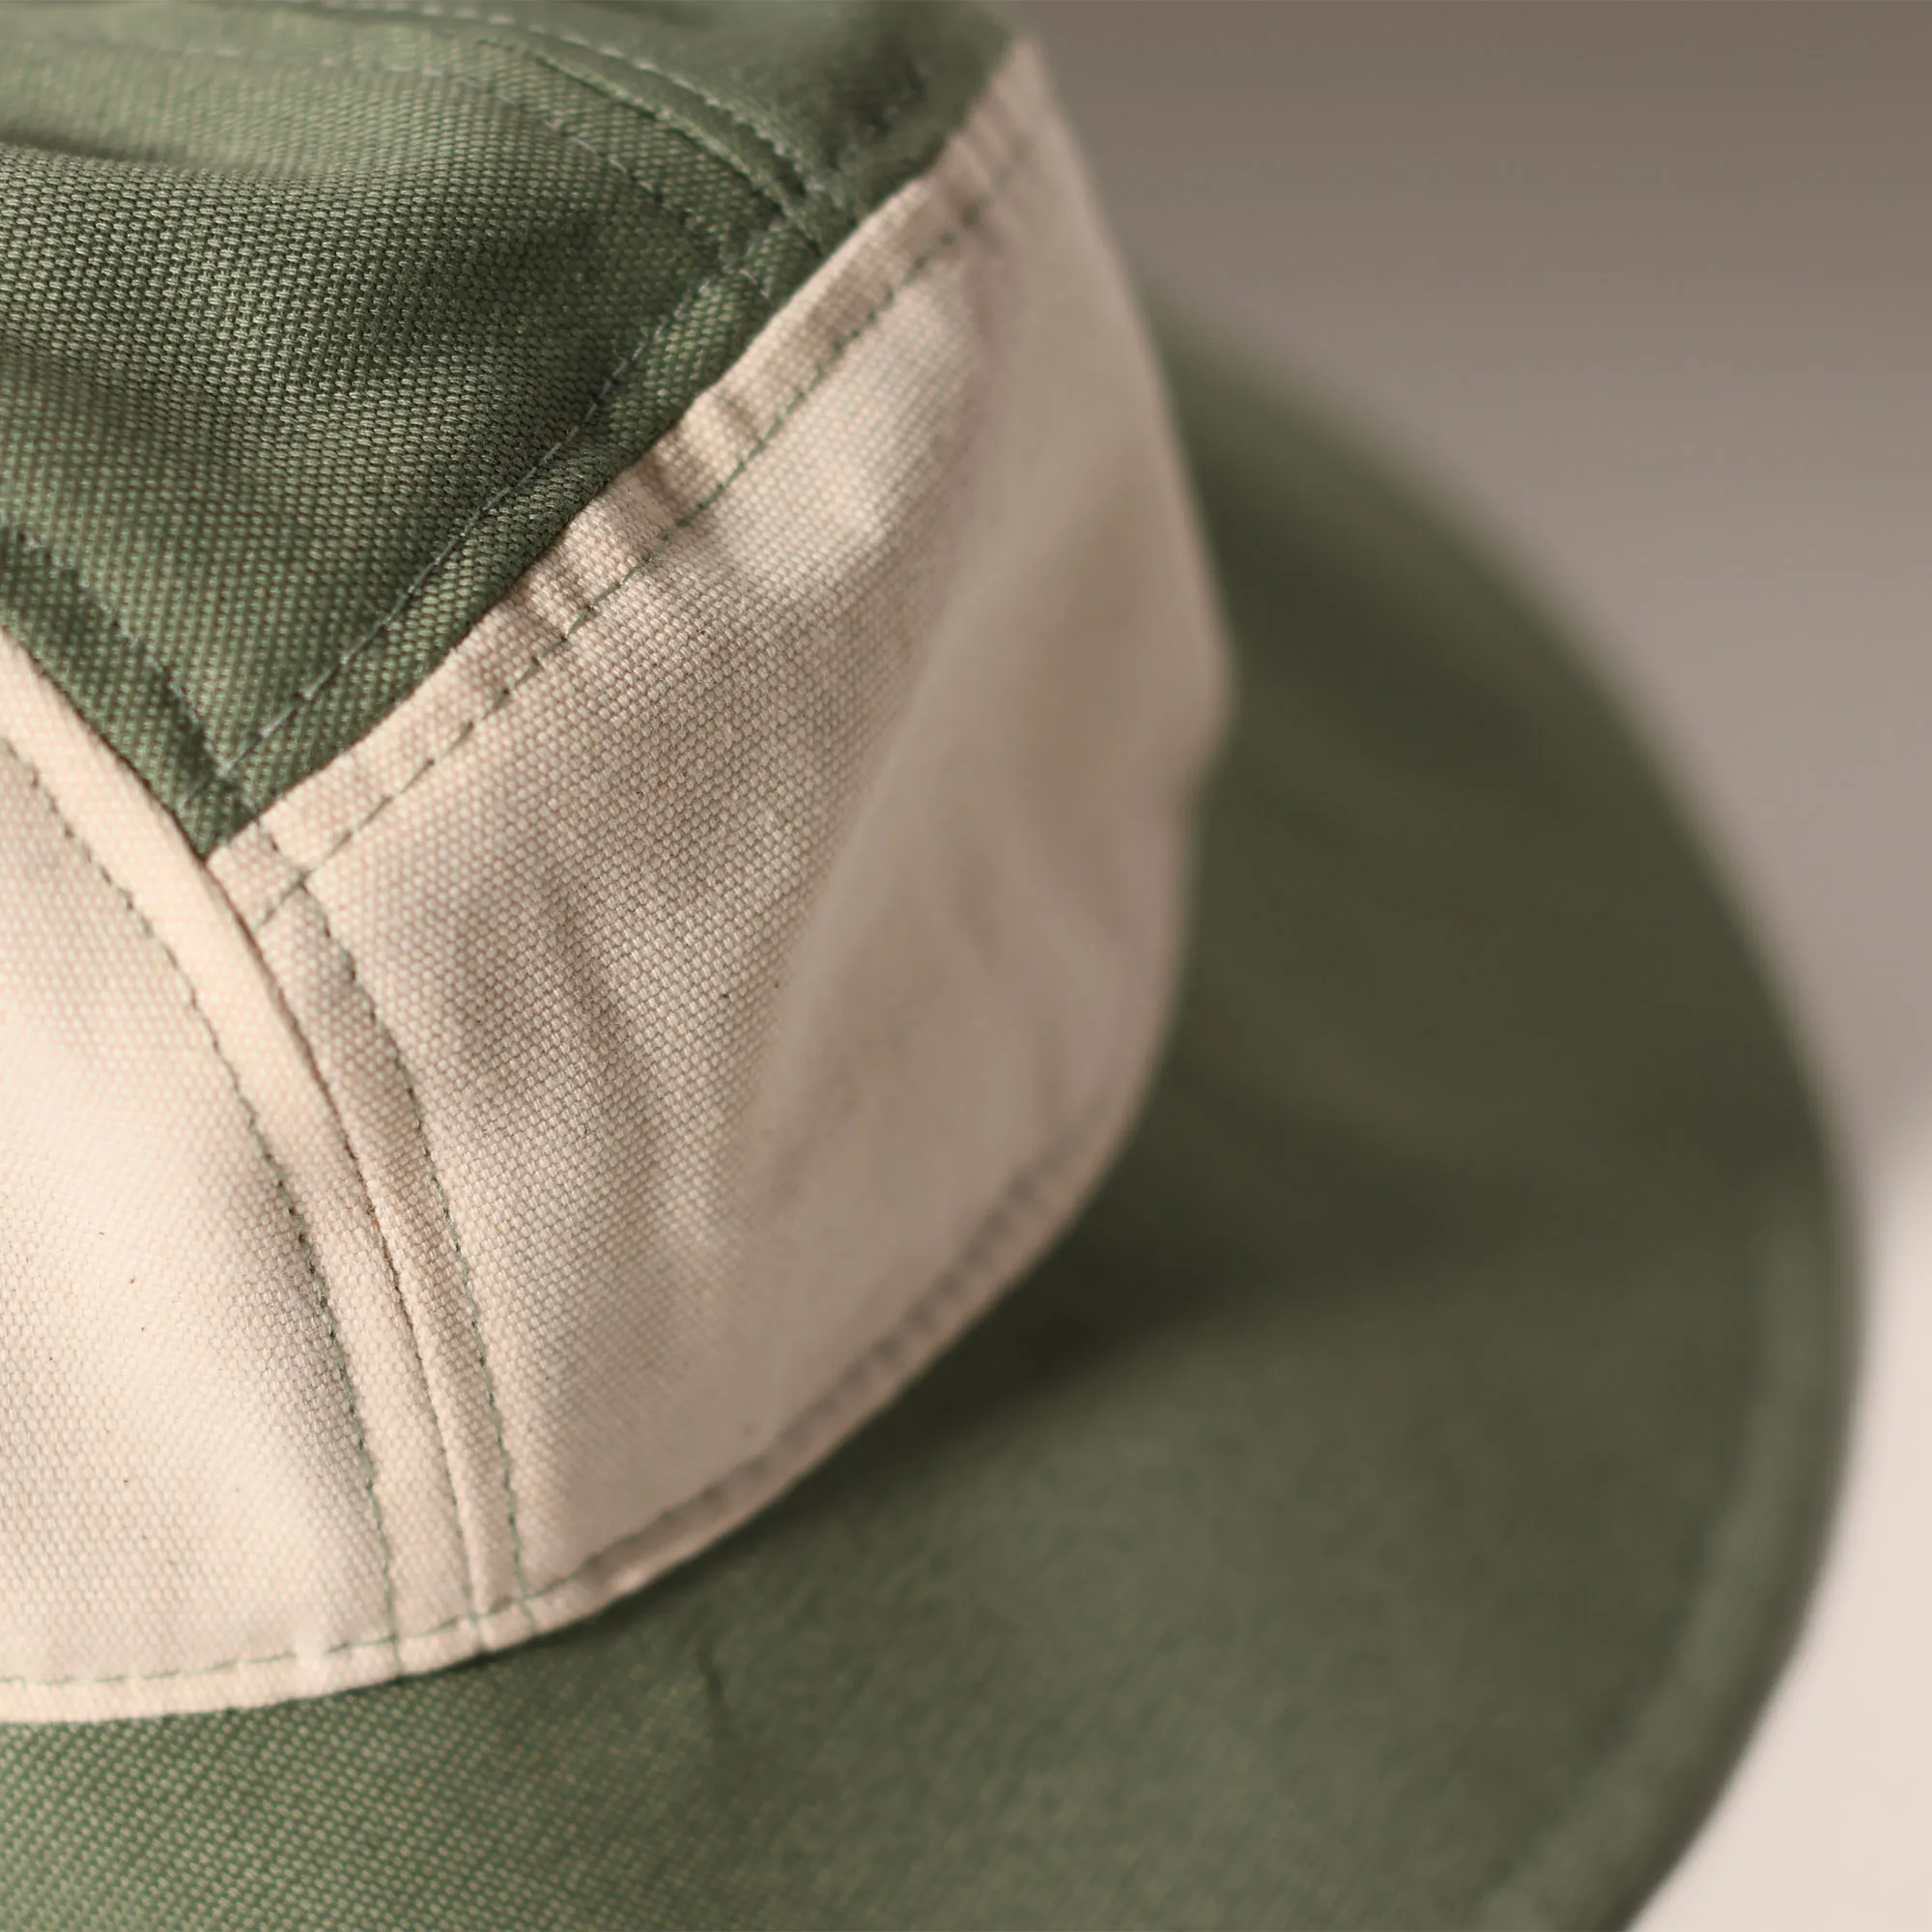 KiETLA klobúčik s UV ochranou 2-4 roky - Natural / Green 1×1 ks, detský klobúčik